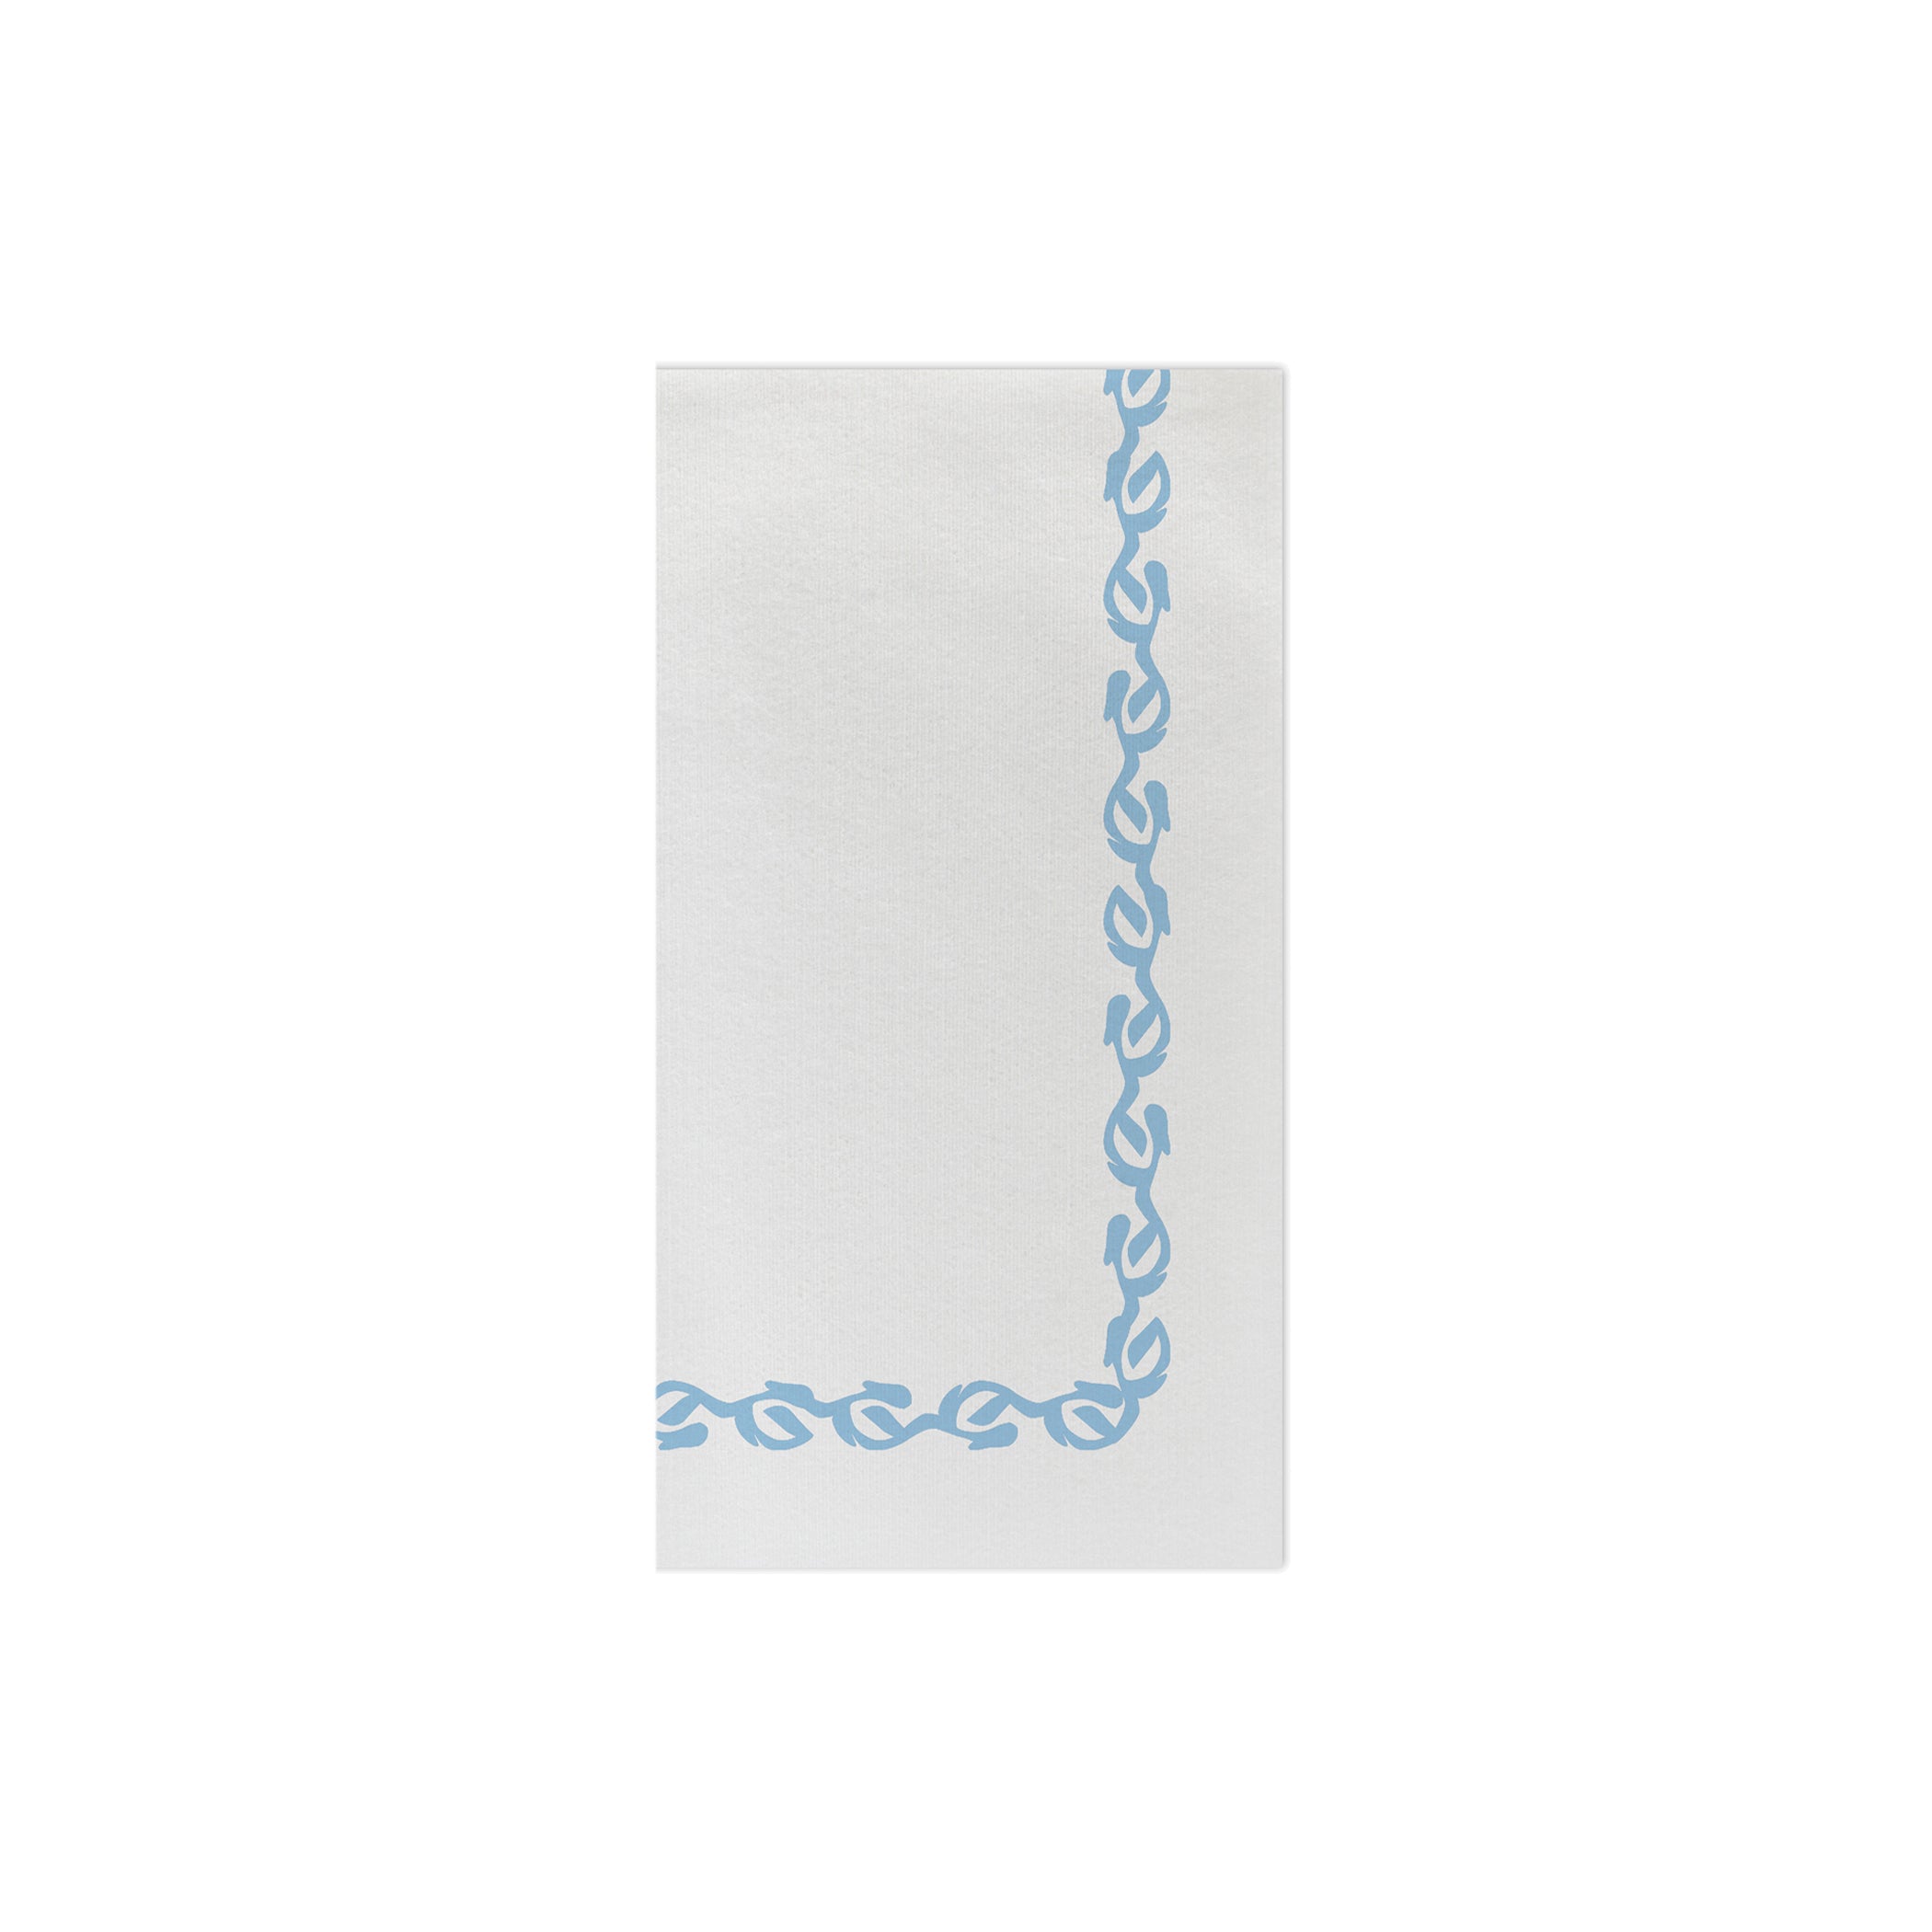 Papersoft Napkins Florentine Light Blue Guest Towels (Pack of 20)